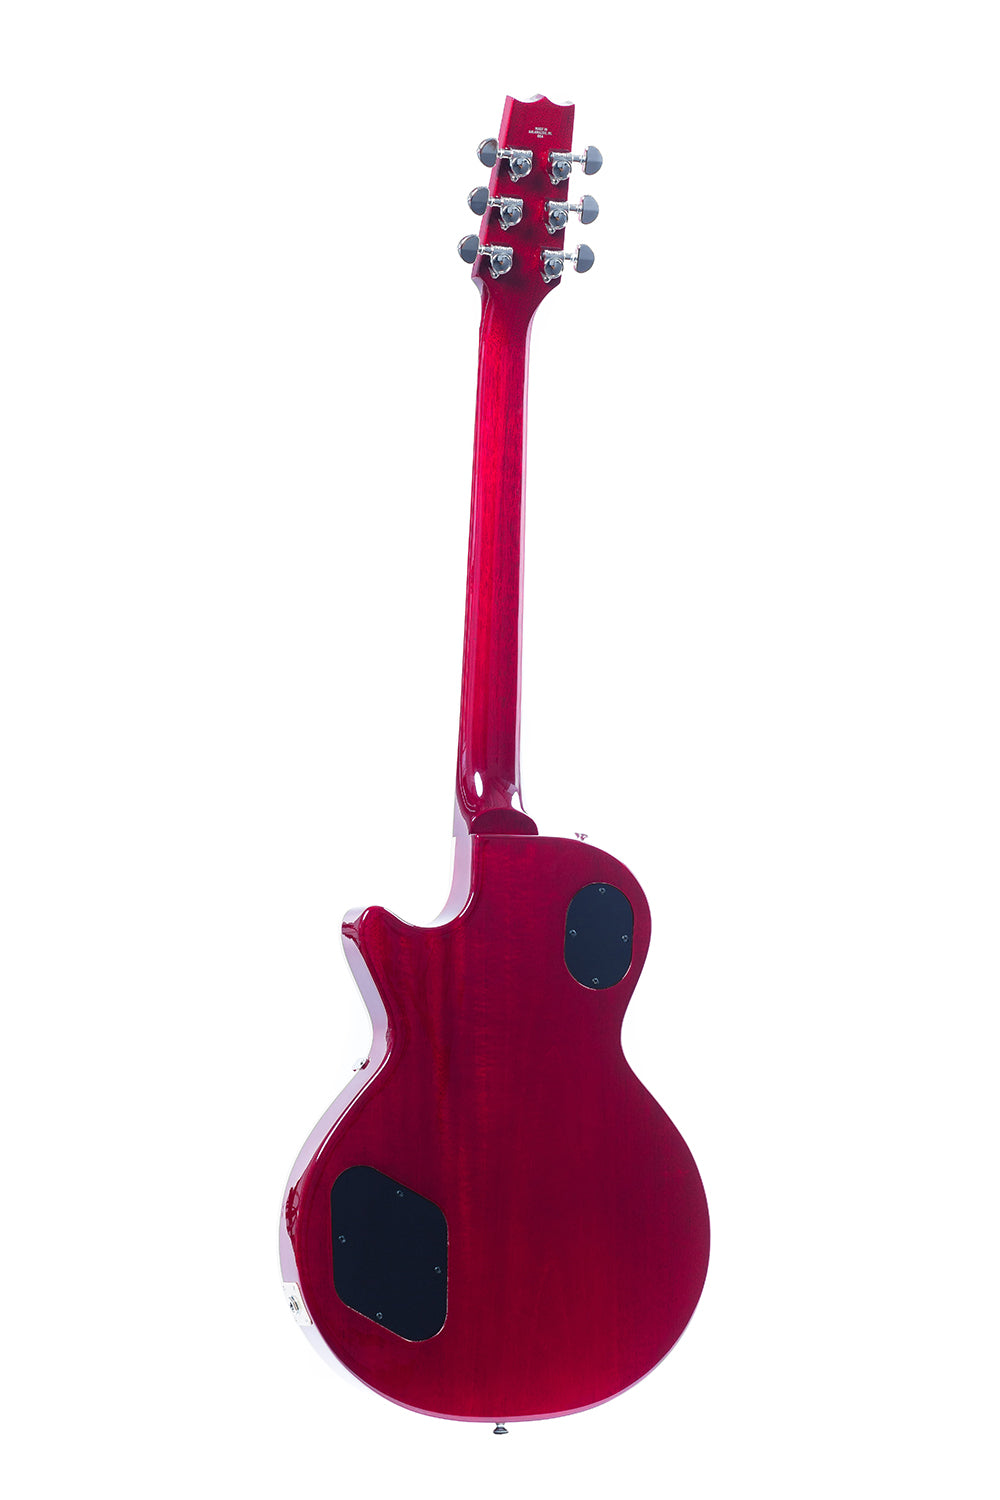 Heritage H150-VCS Solid Body Guitar - Vintage Cherry Sunburst